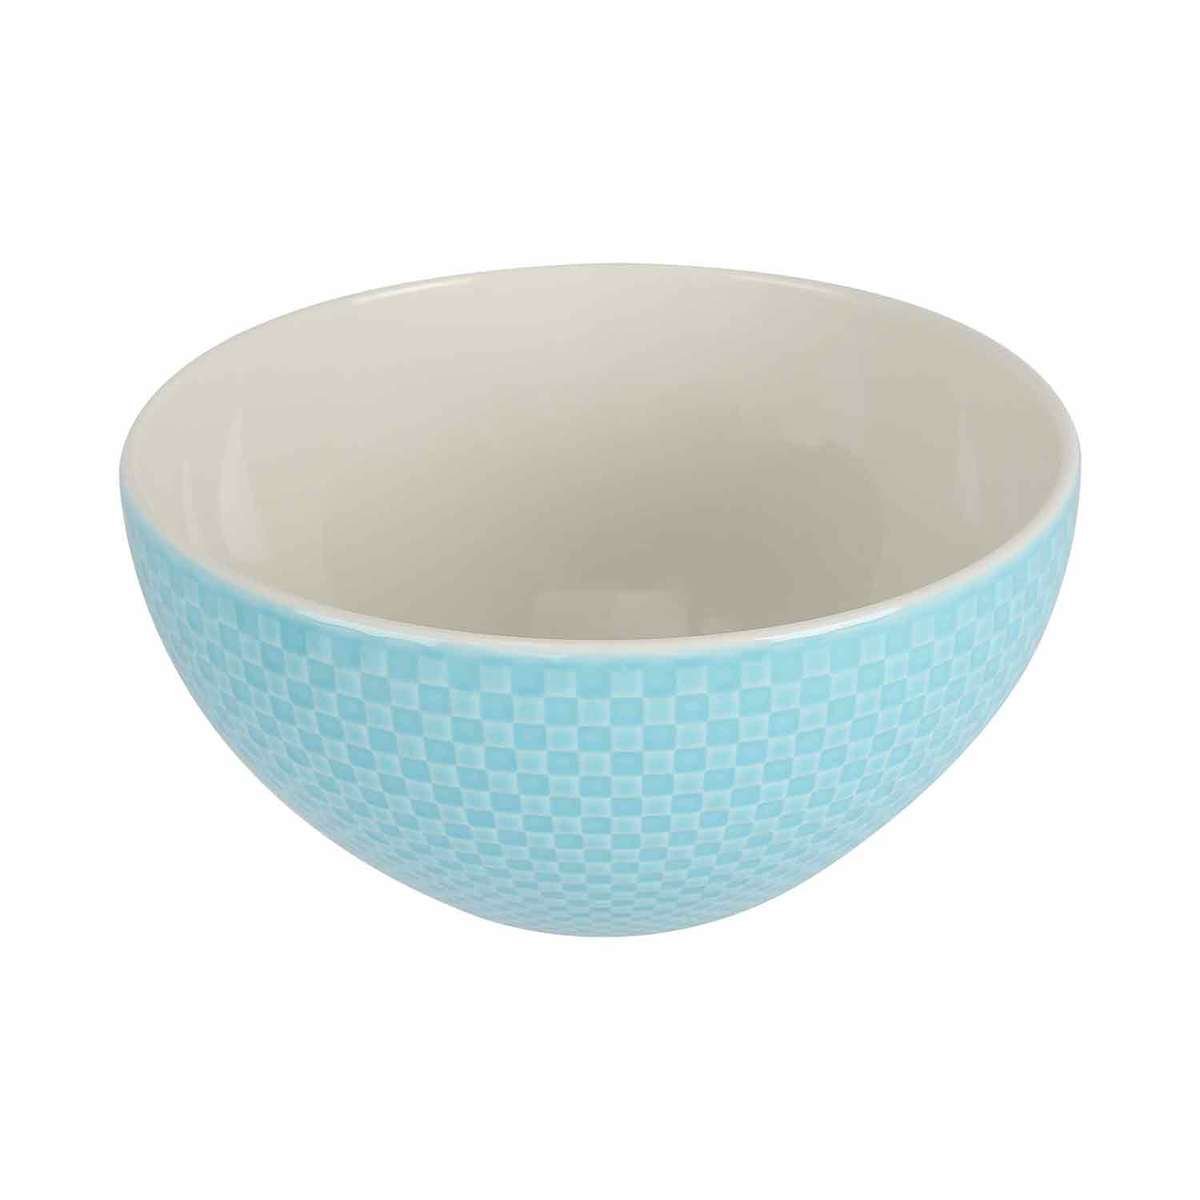 Qualitier Cereal Bowl Blue 15cm